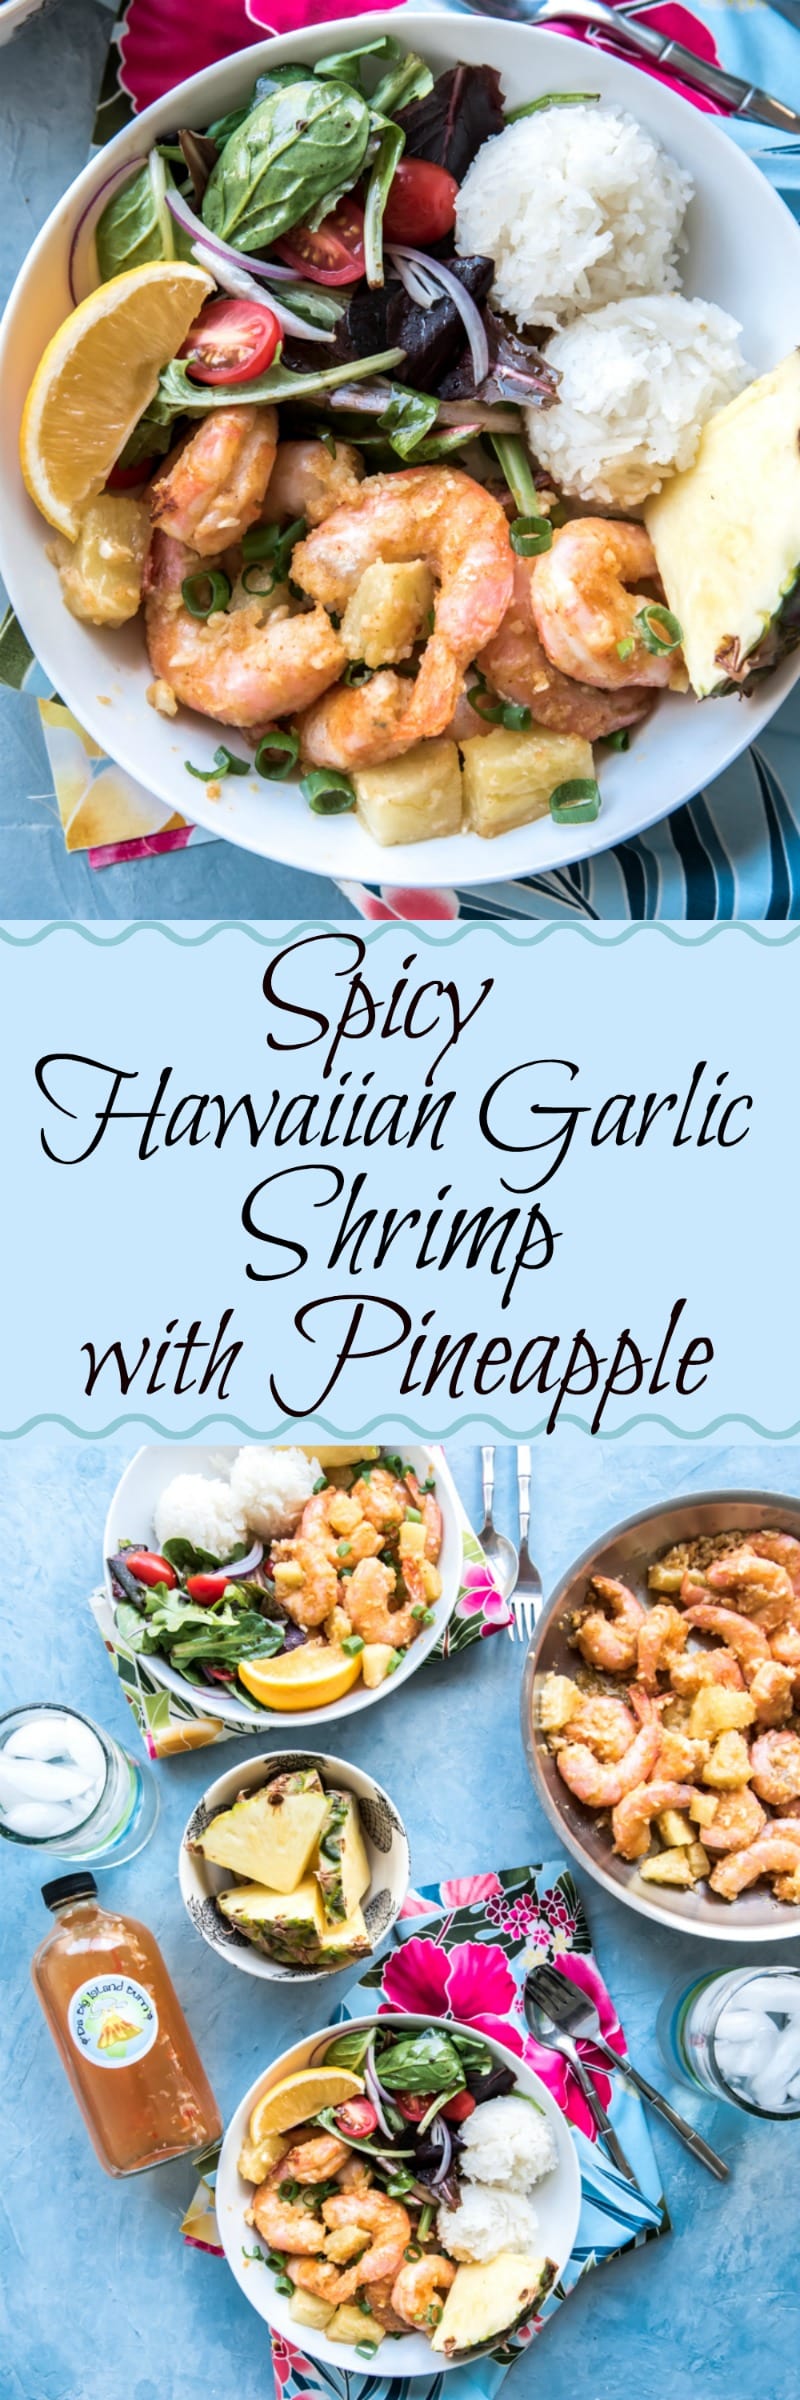 Spicy Hawaiian Garlic Shrimp with Pineapple www.pineappleandcoconut.com